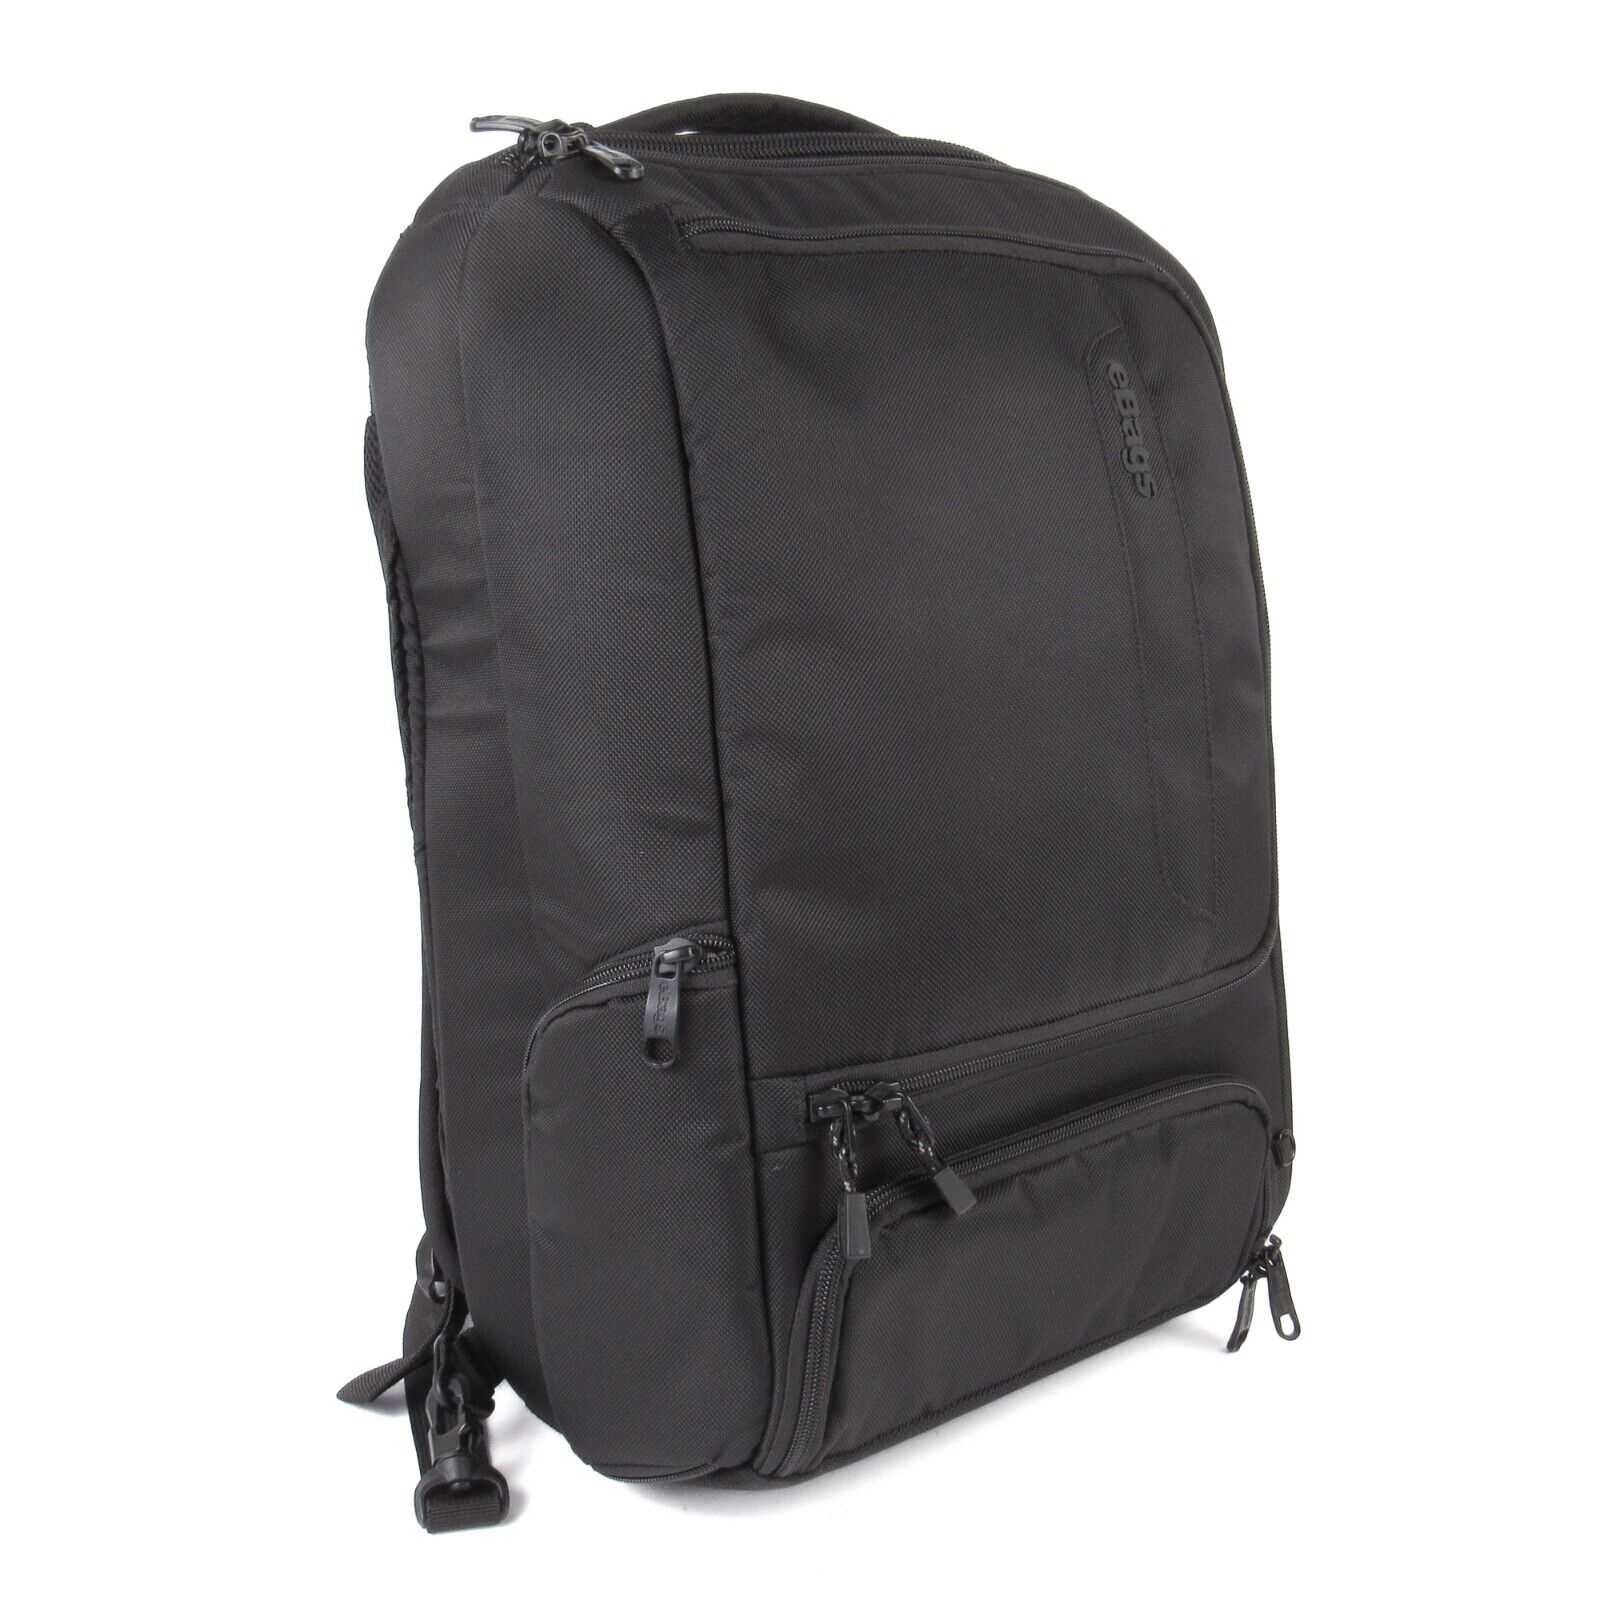 eBags Pro Slim Laptop Backpack Black Professional Travel Bag 18